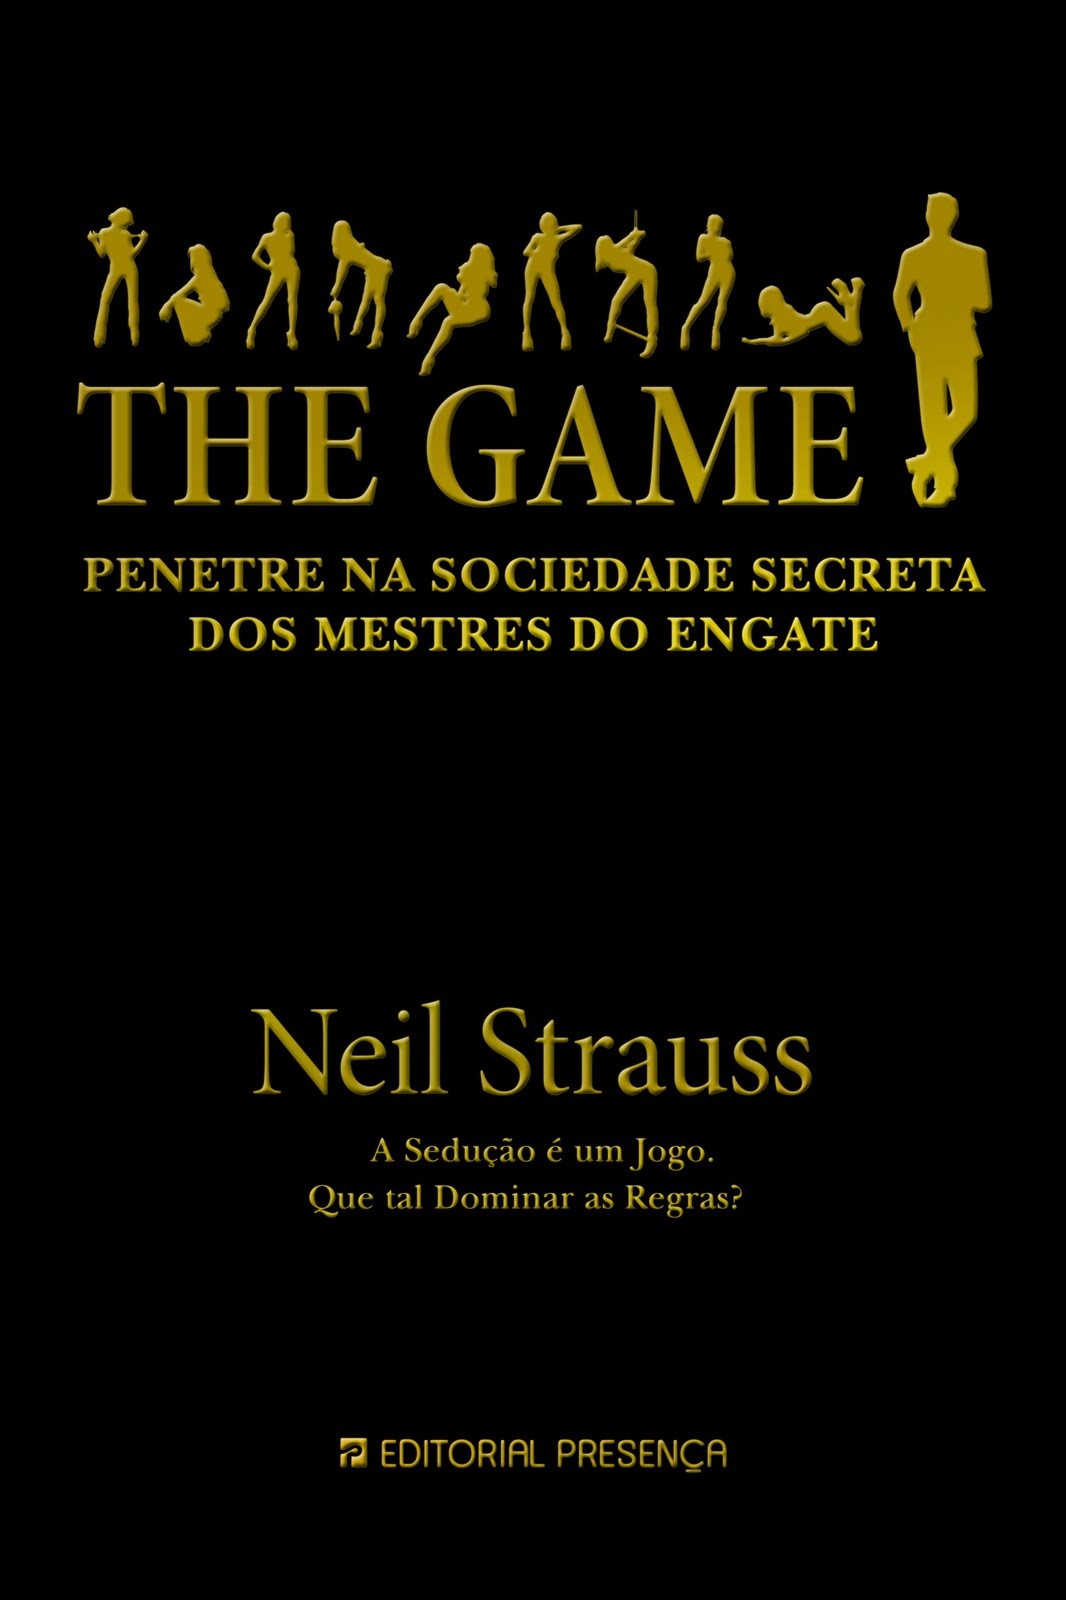 Book the game neil strauss pdf